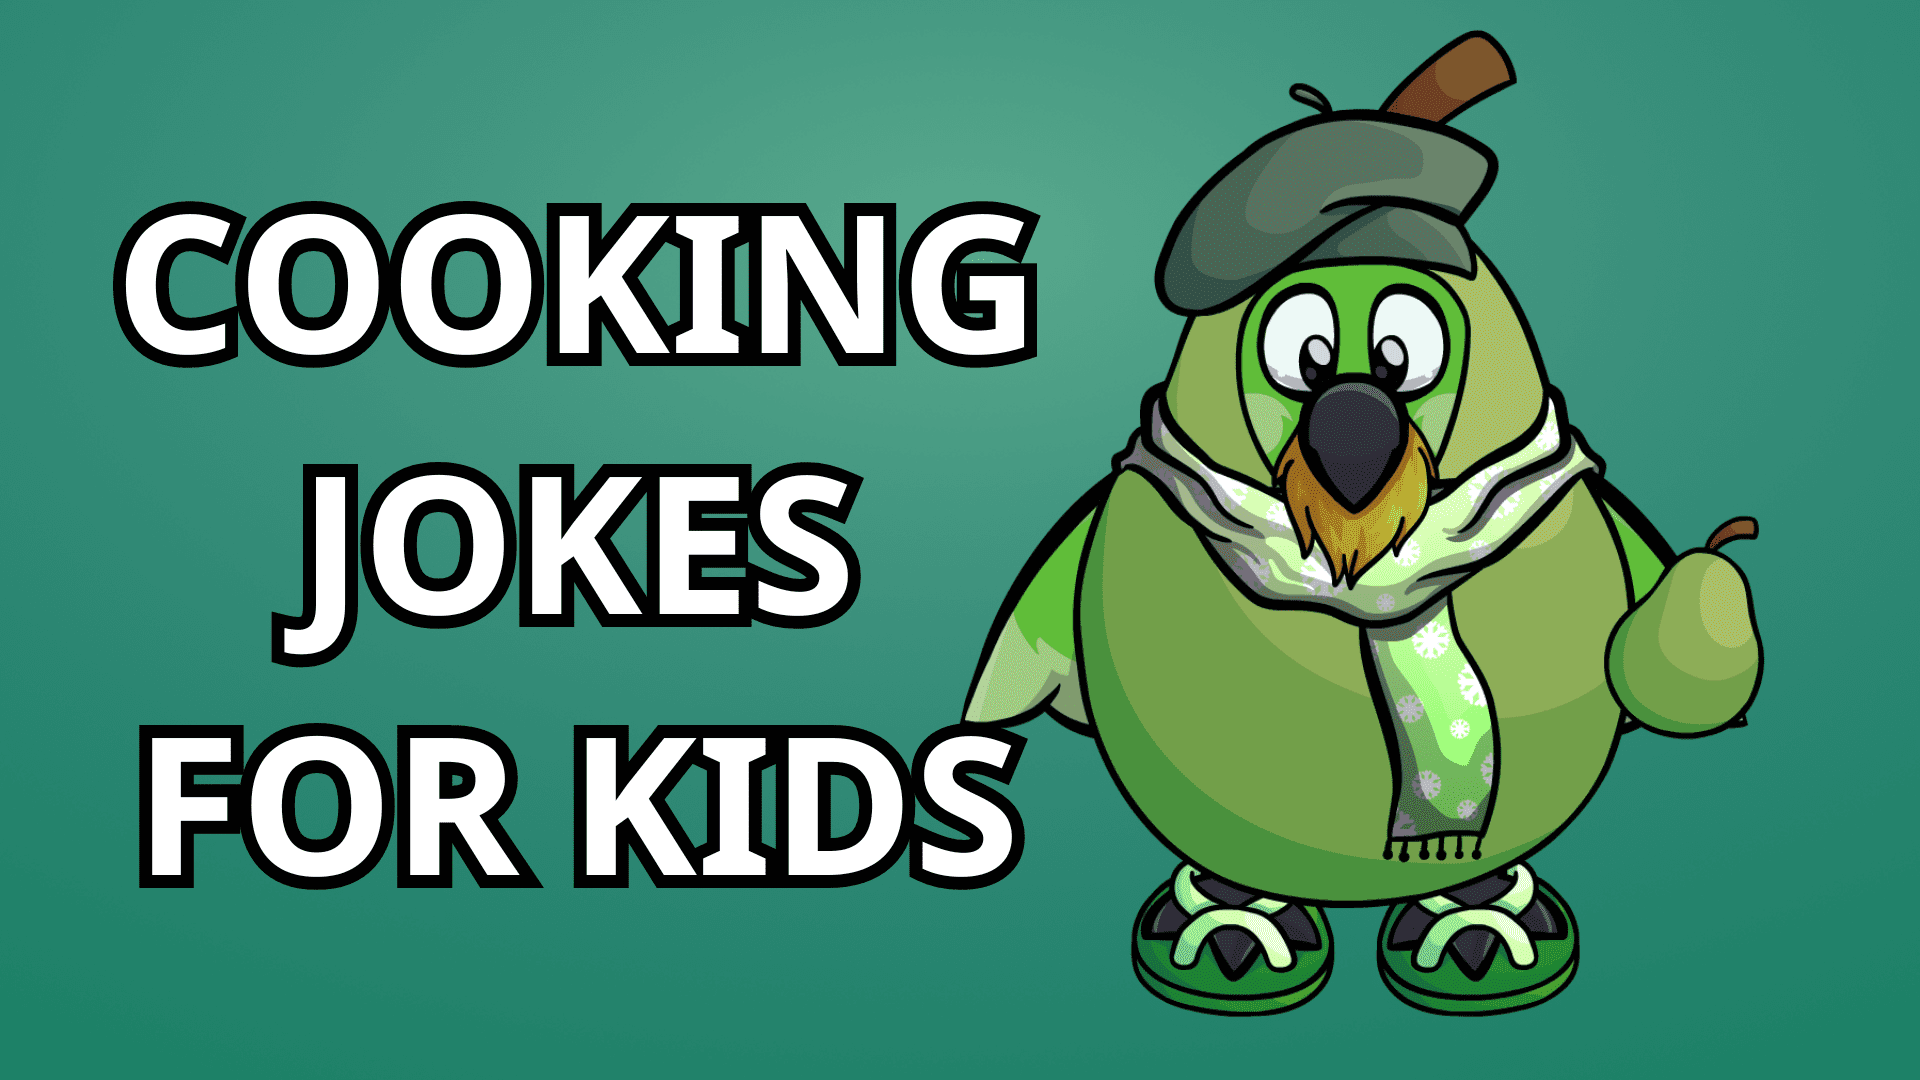 10 Cooking Jokes for Kids